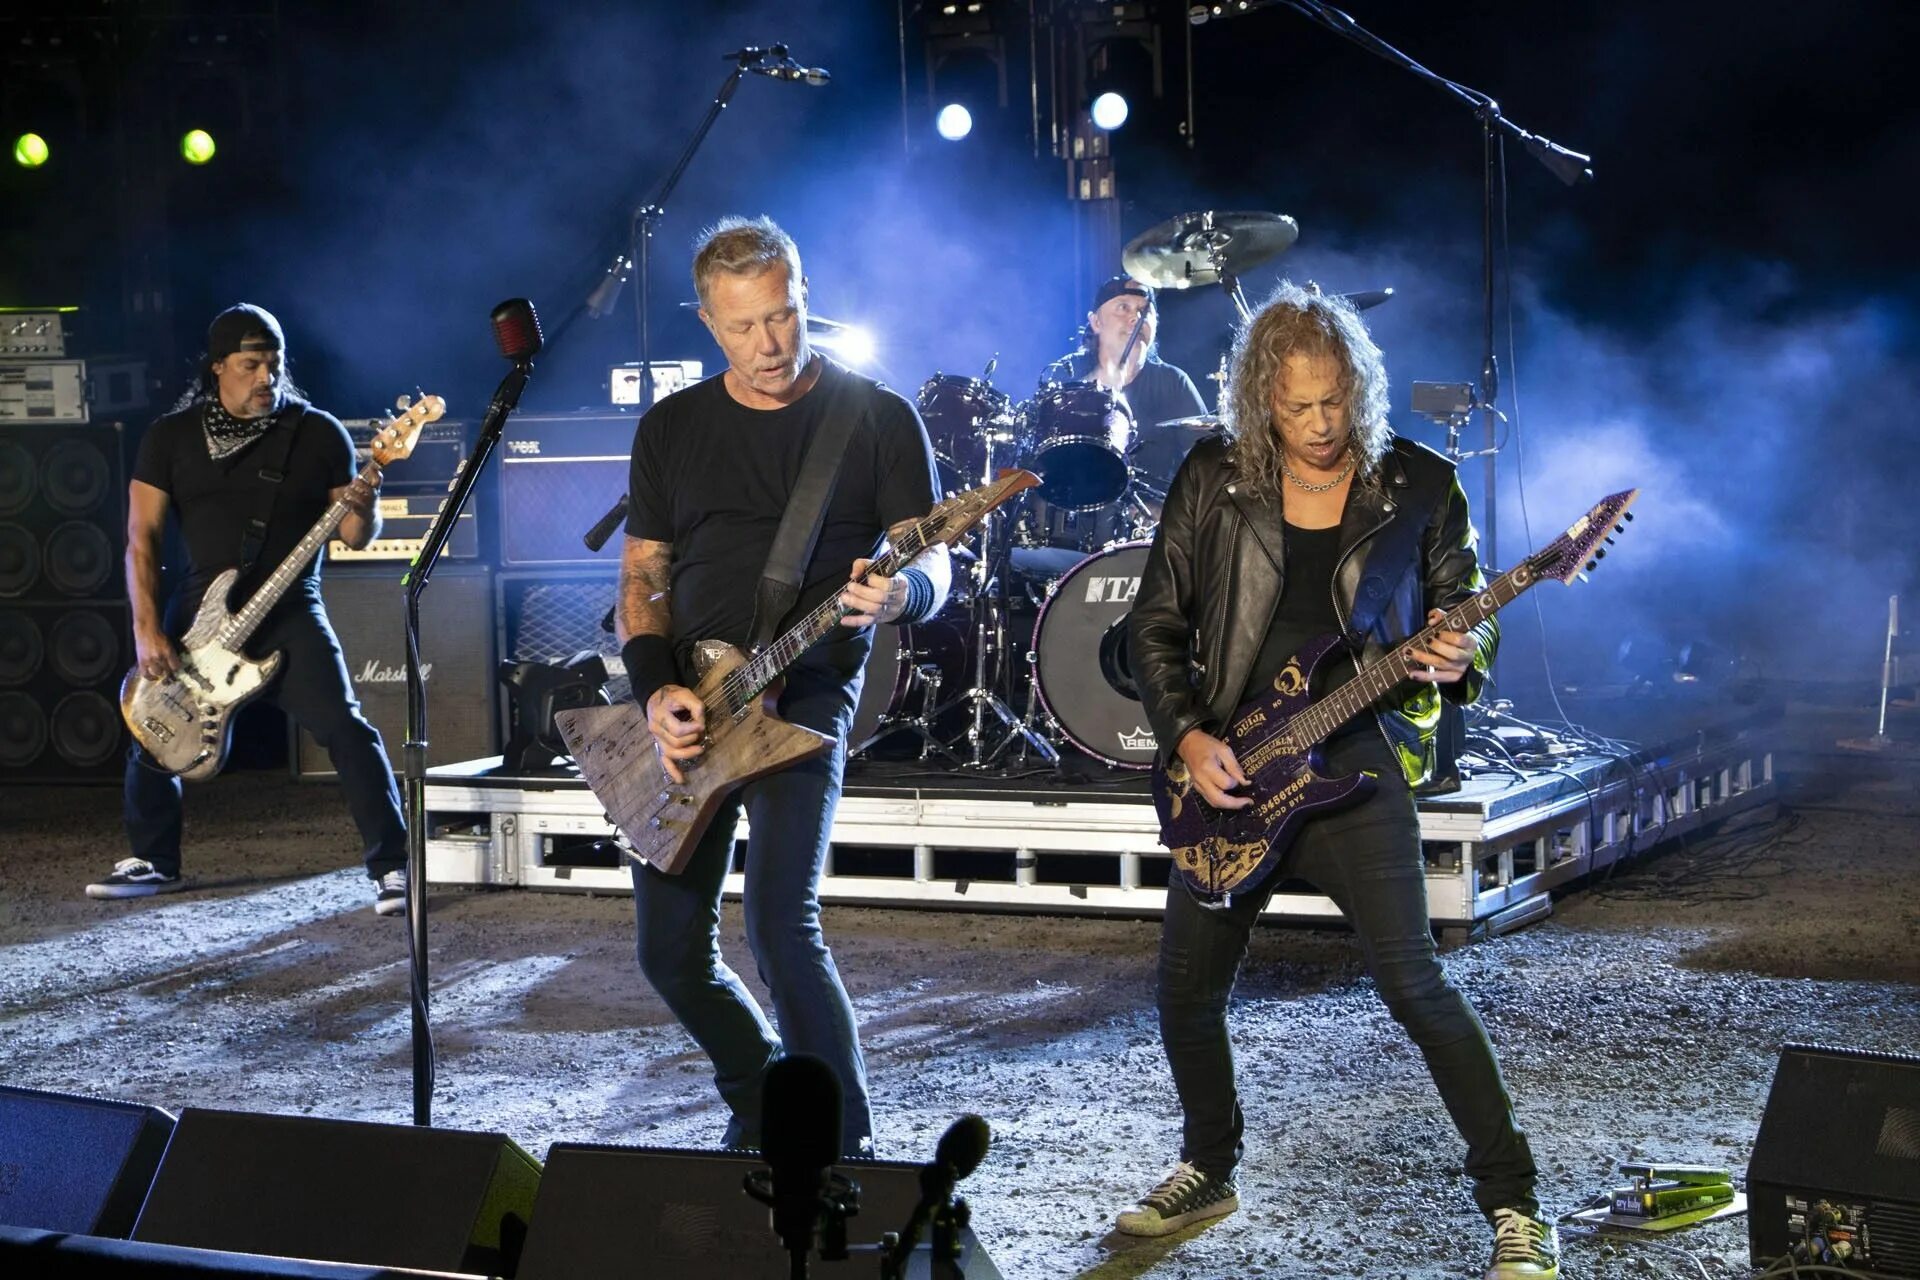 Группа Metallica 2020. Концерт Metallica 2020. Металлика 2022 концерт. Металика состав группы 2022. Metallica лучшие песни